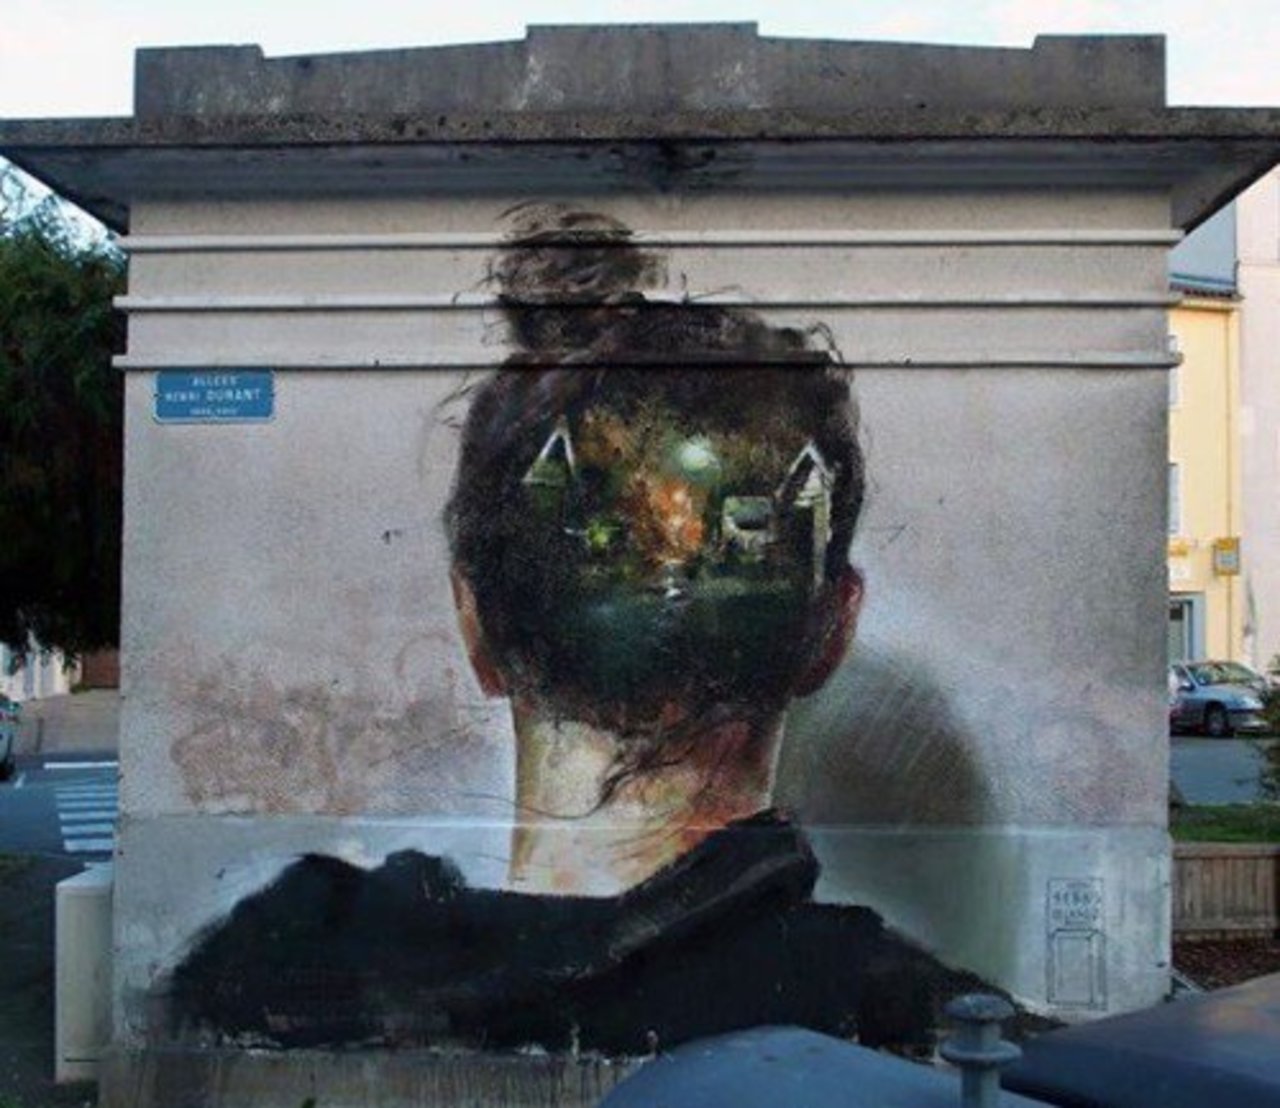 ... #Niort #France
by #SebasVelasco & #ManoloMesa ()
#streetart #graffiti #art https://t.co/esnGE4cDtn